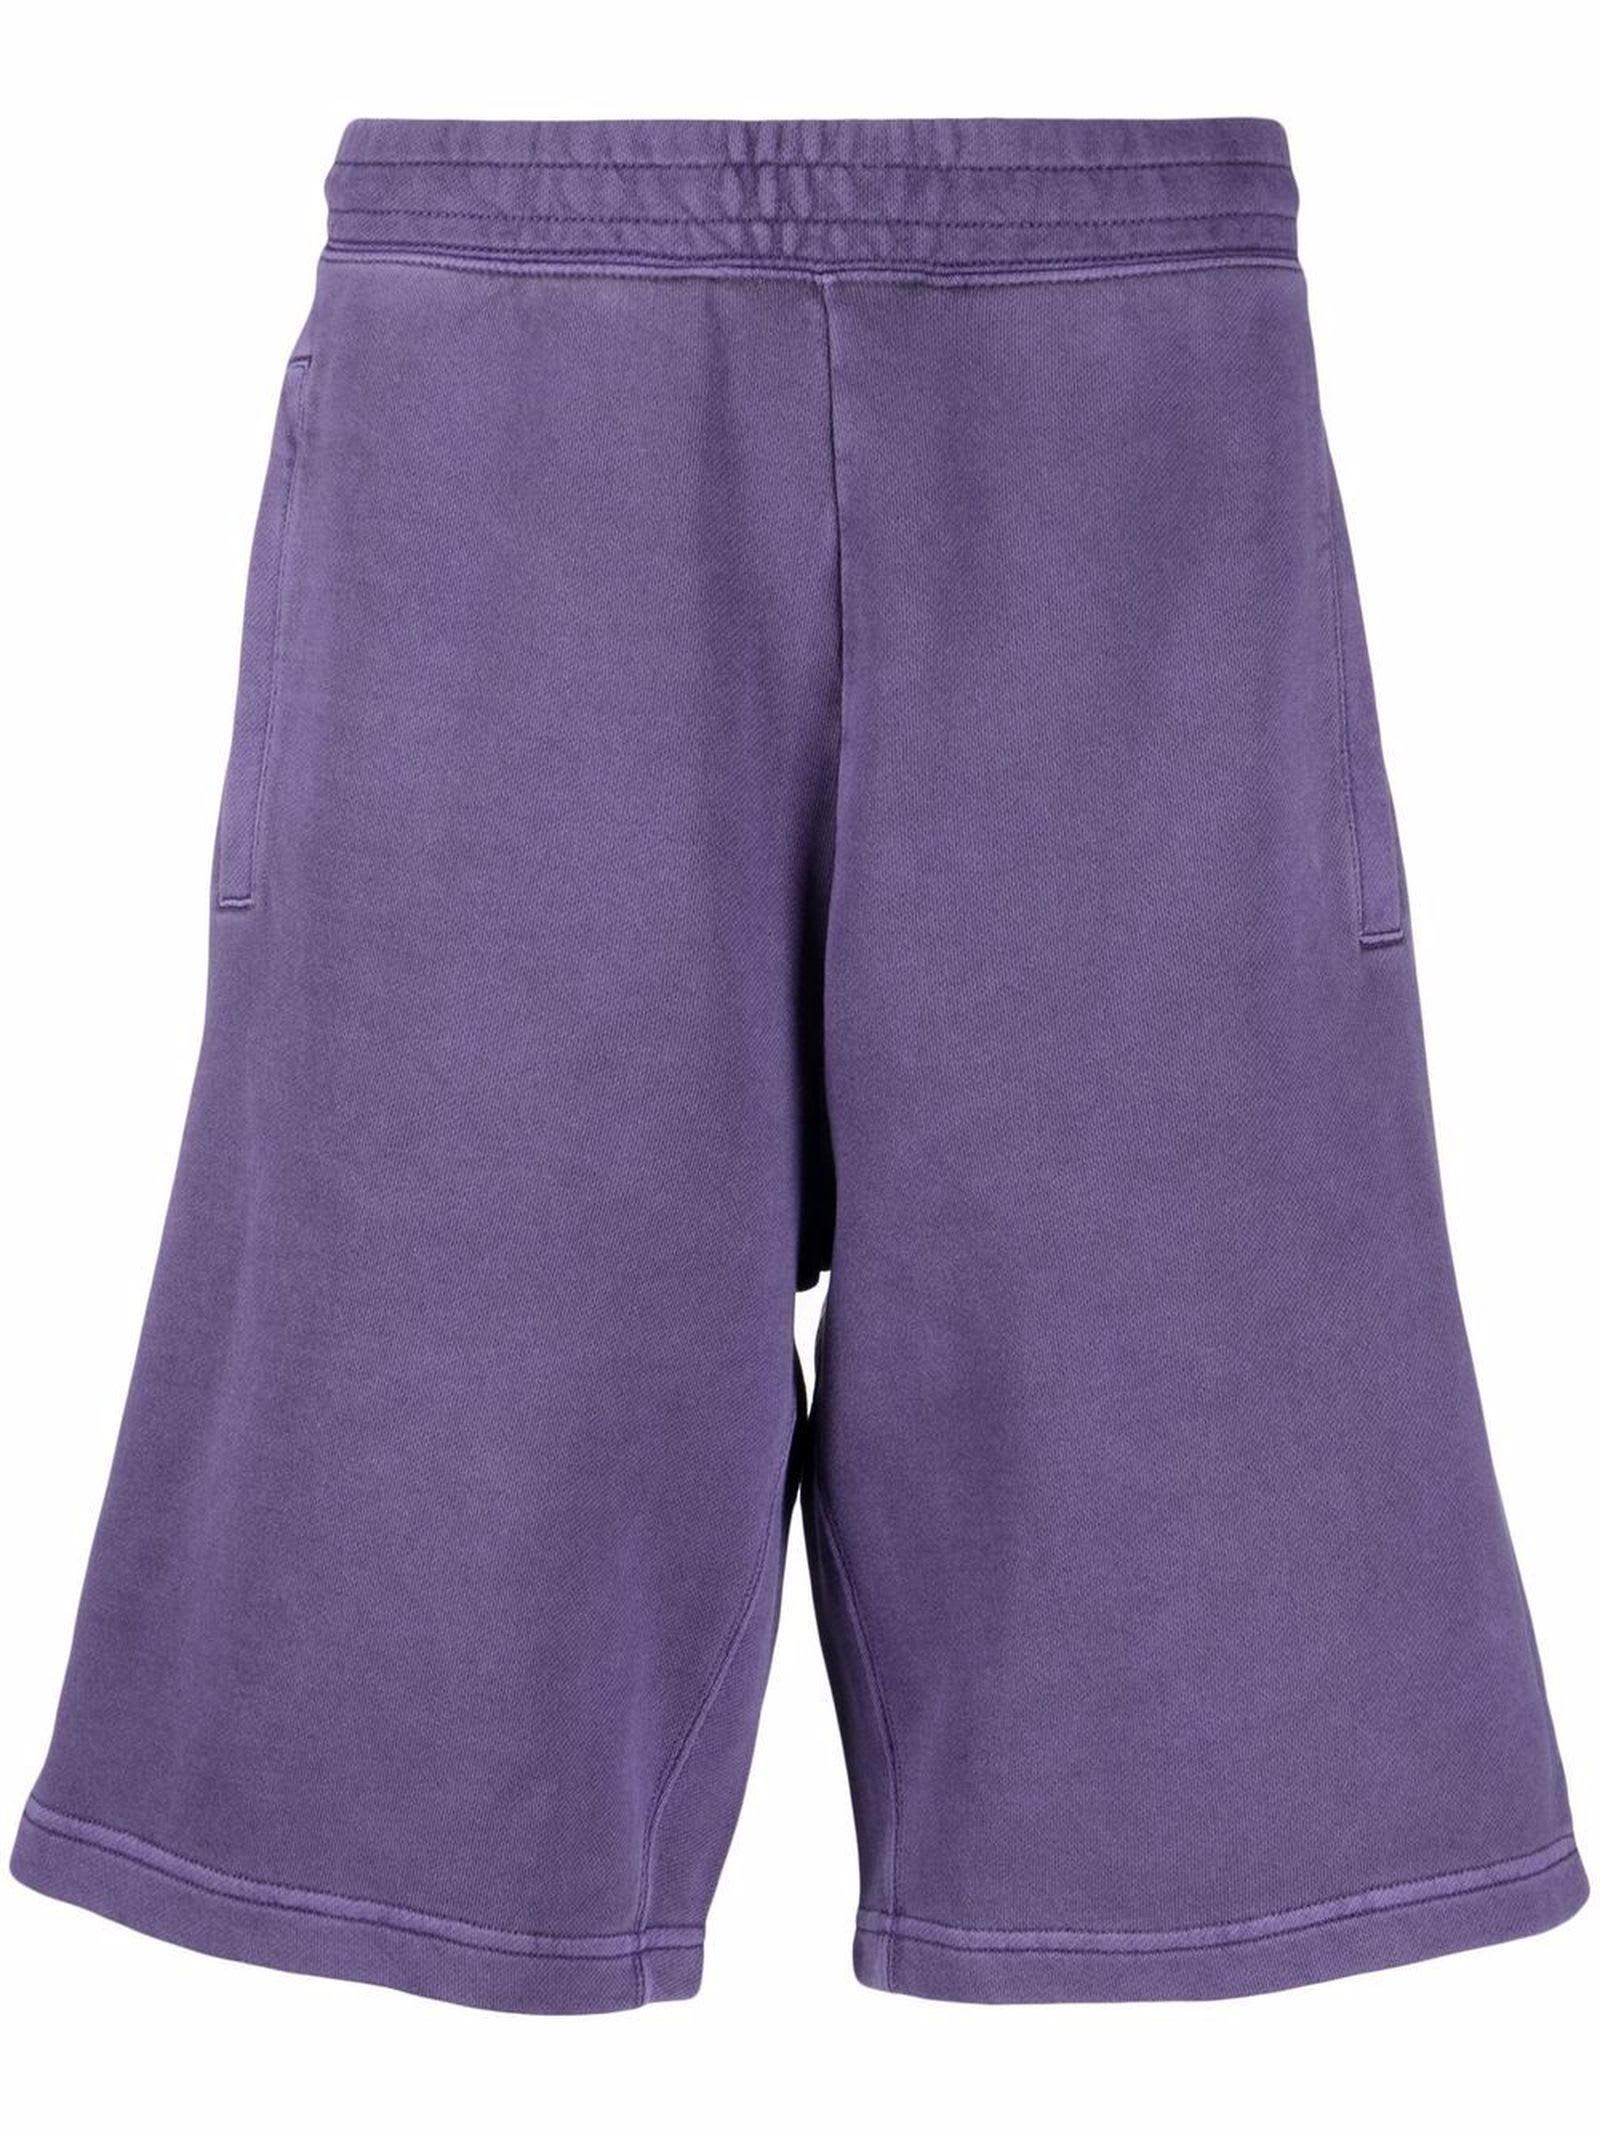 Carhartt Purple Cotton Shorts